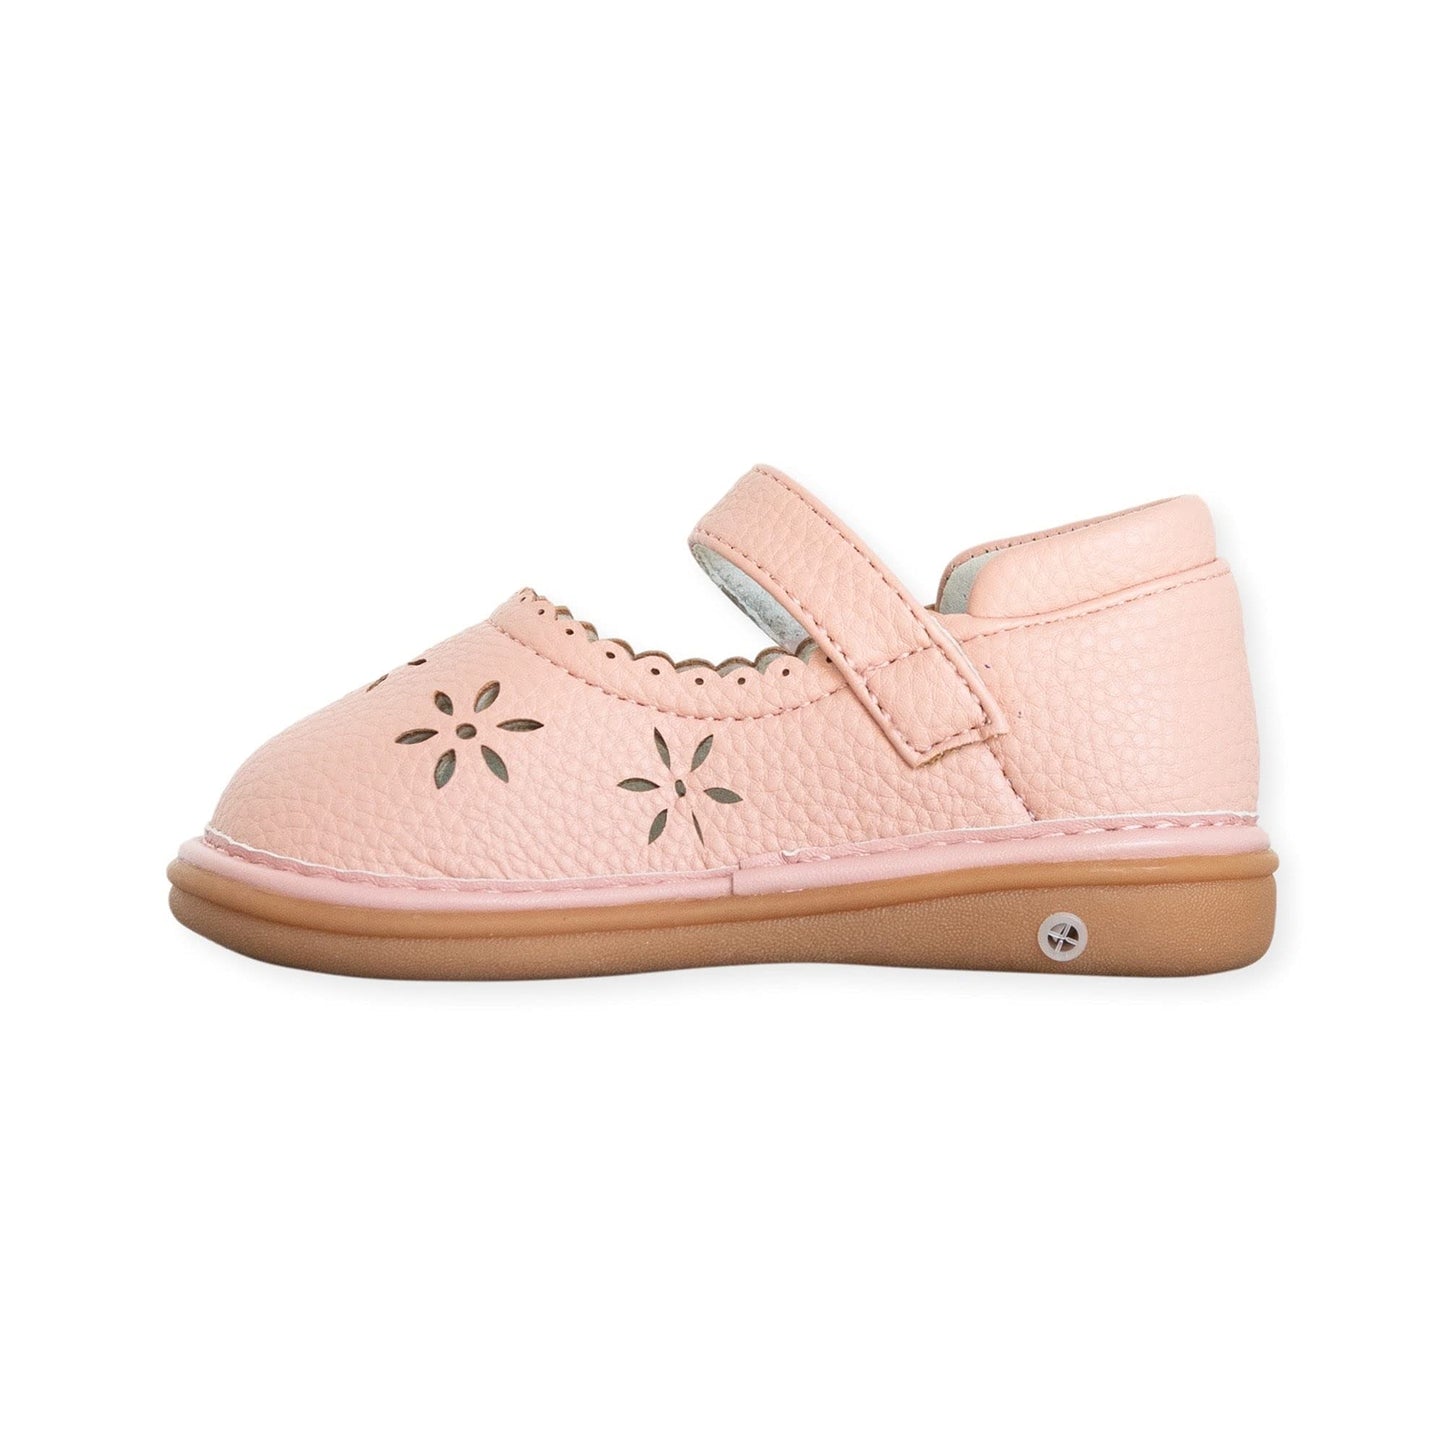 Wee Squeak Toddler Squeaky Shoes Ellie Brown Size 5